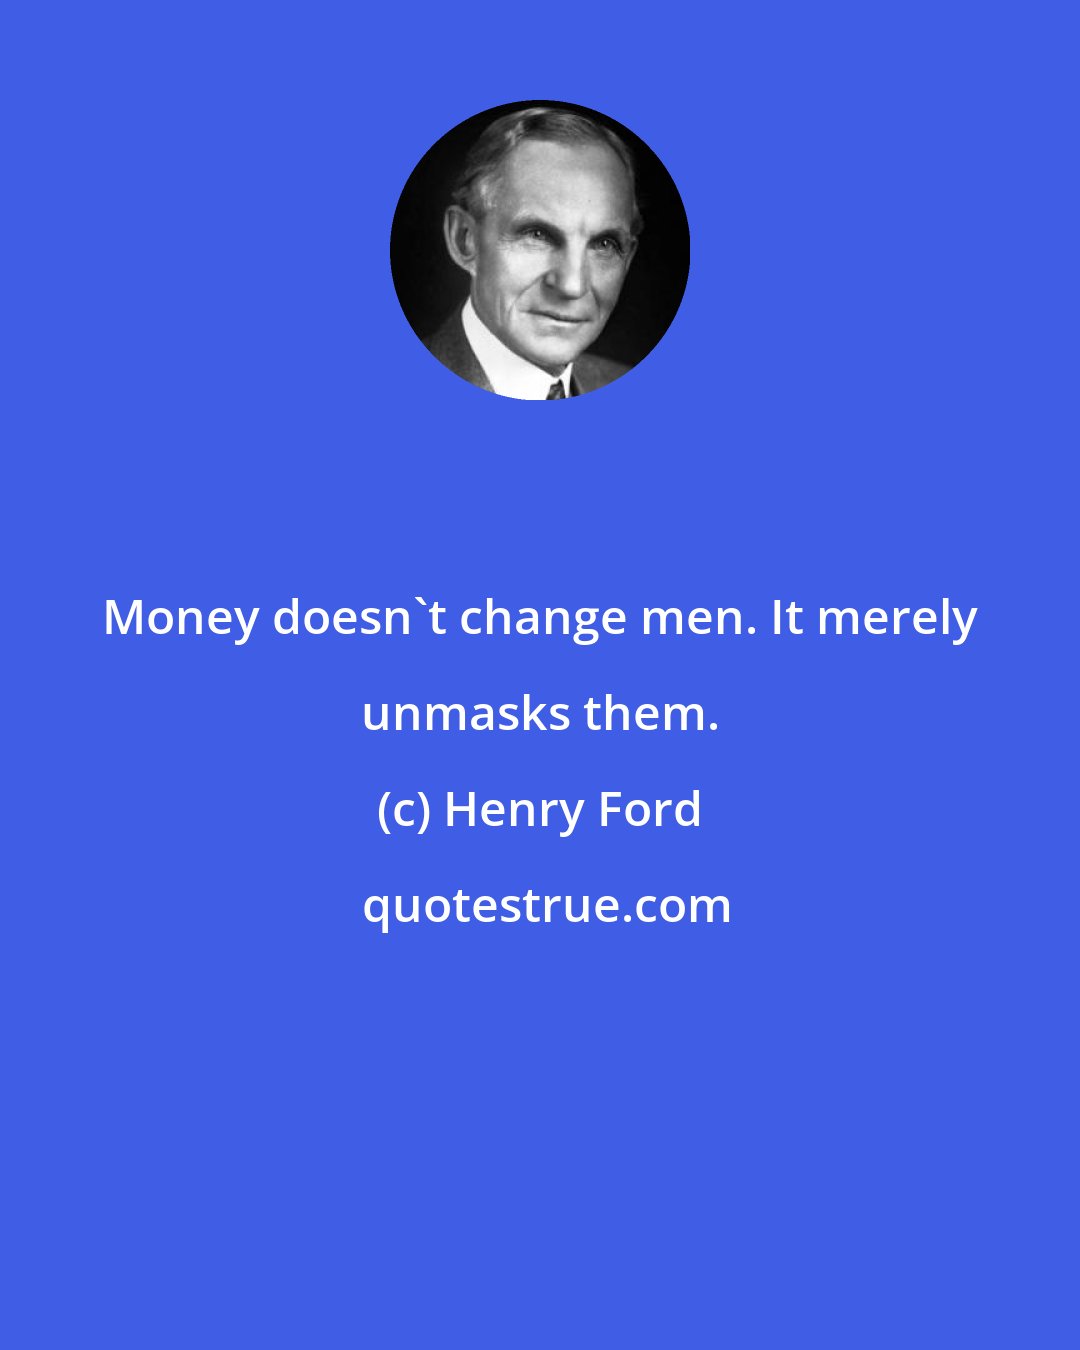 Henry Ford: Money doesn't change men. It merely unmasks them.